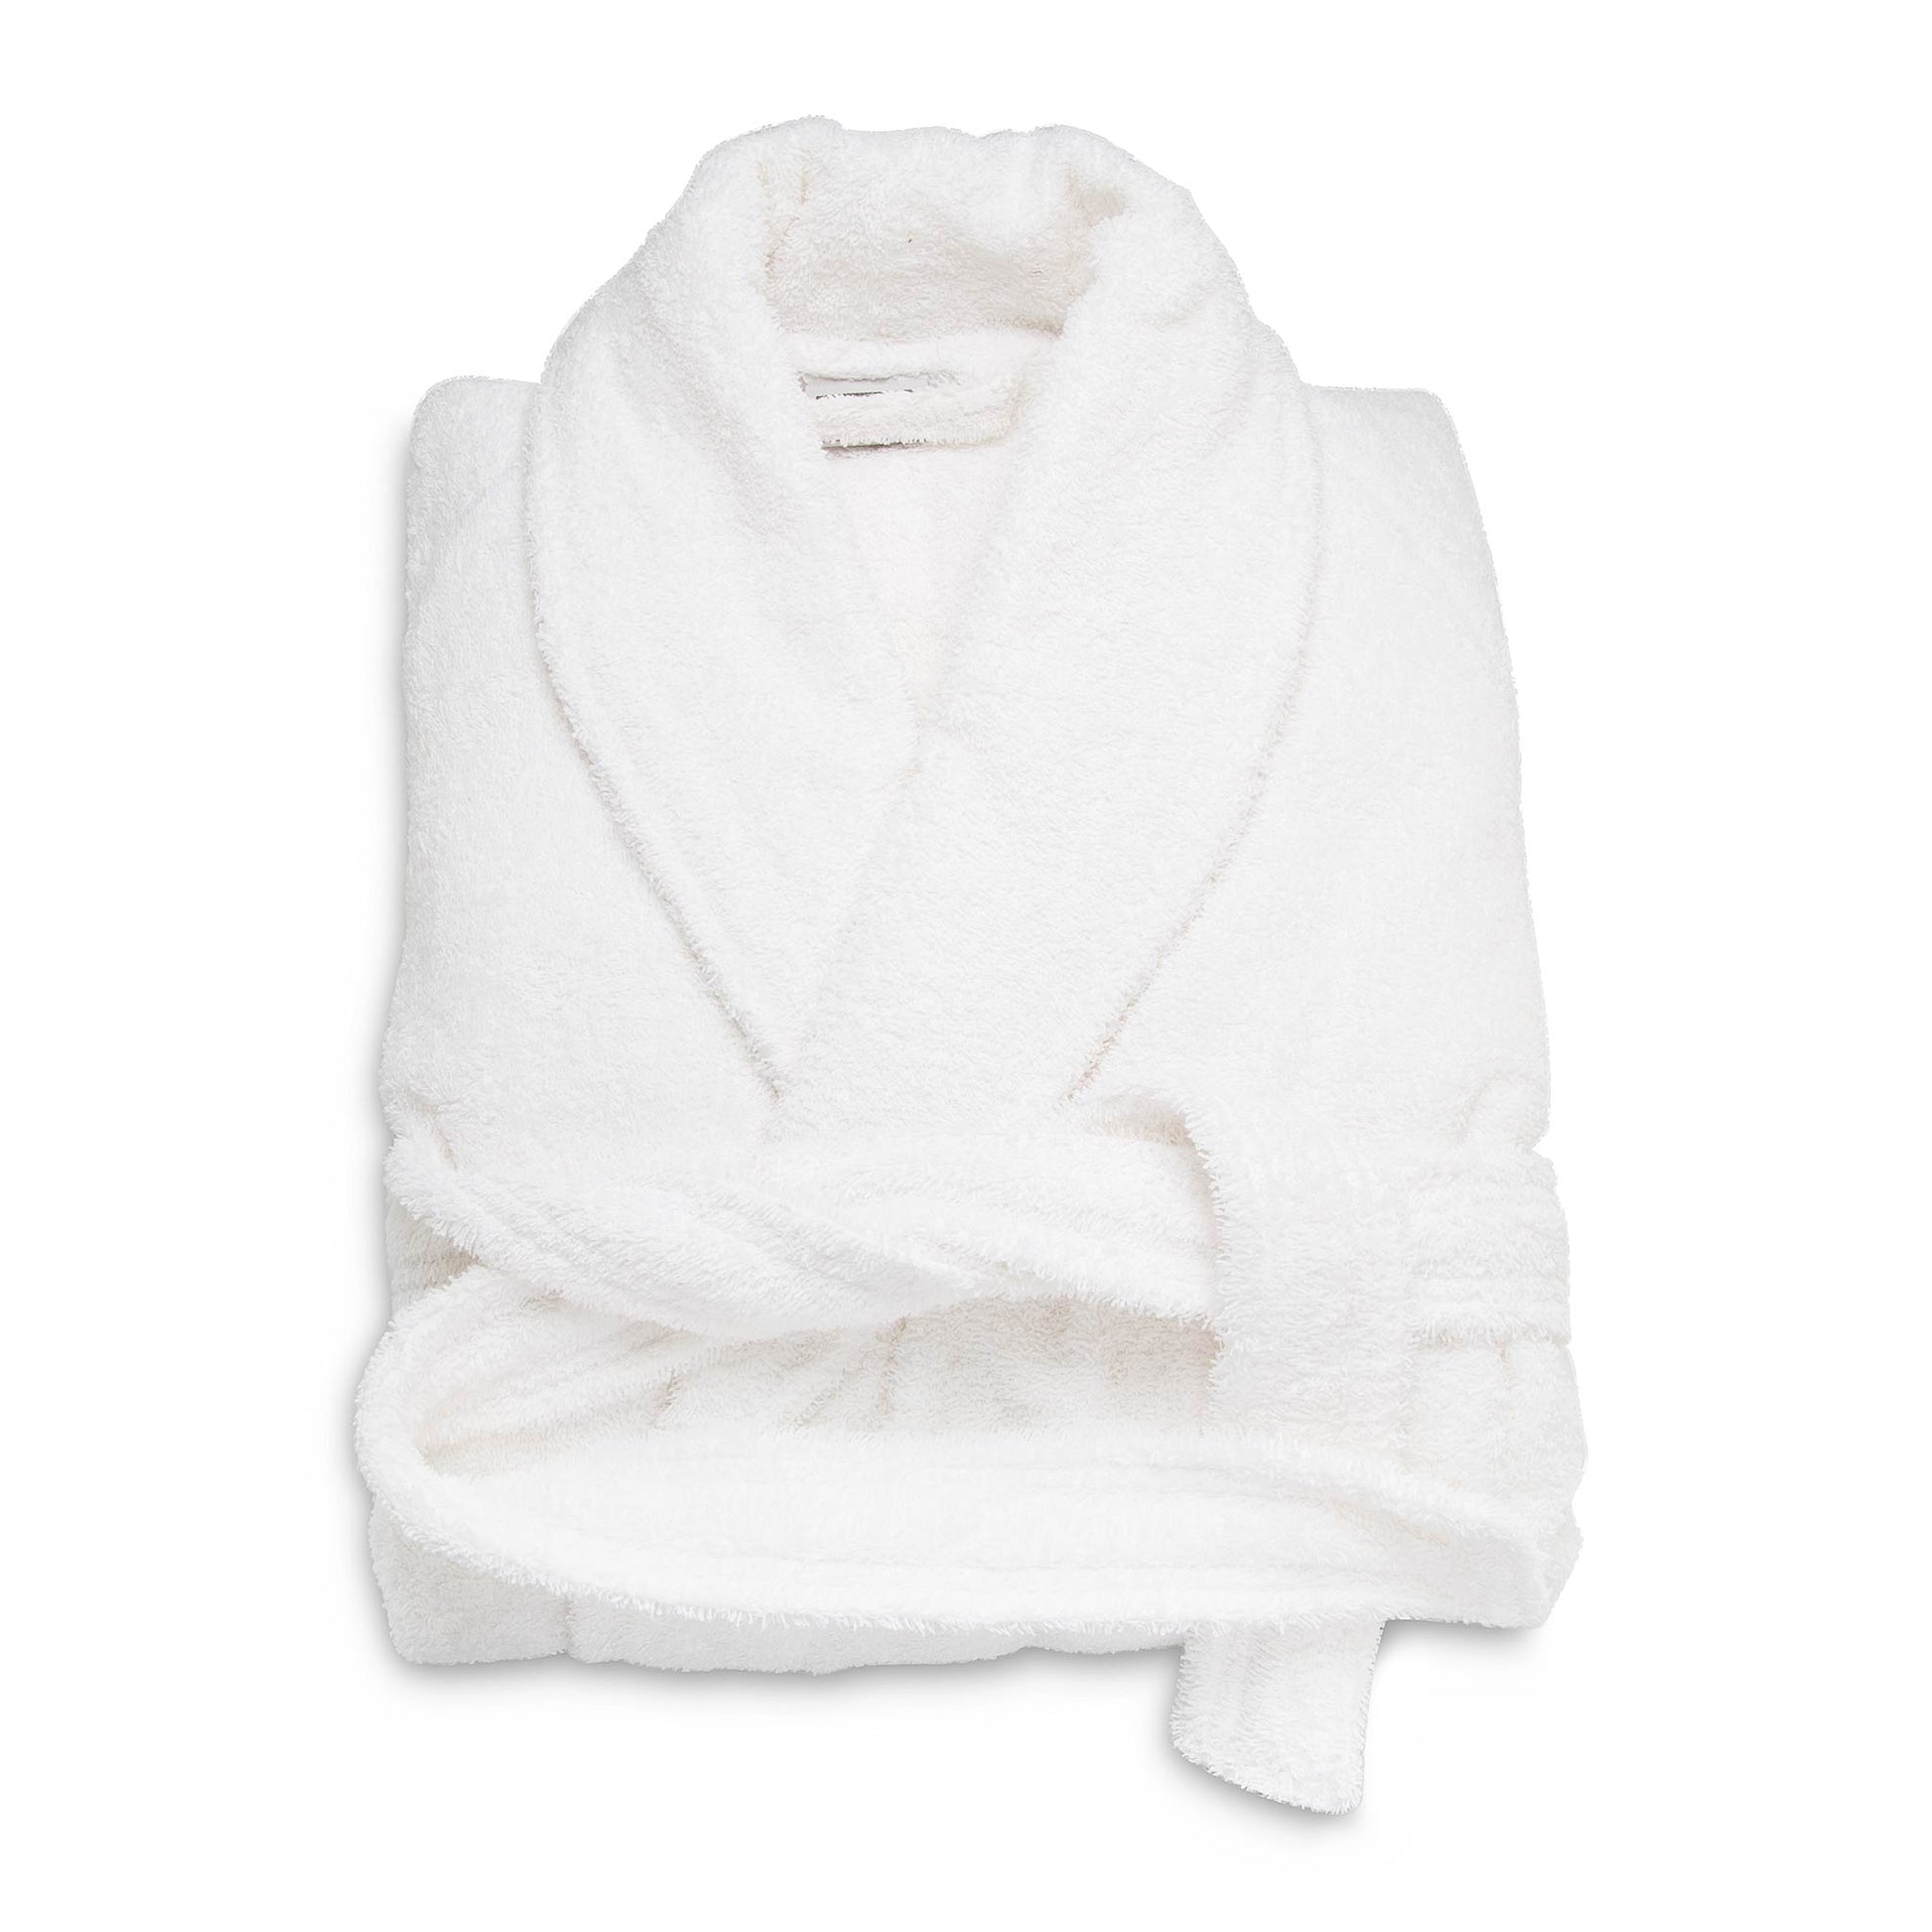 Terry towelling hotel bathrobe white